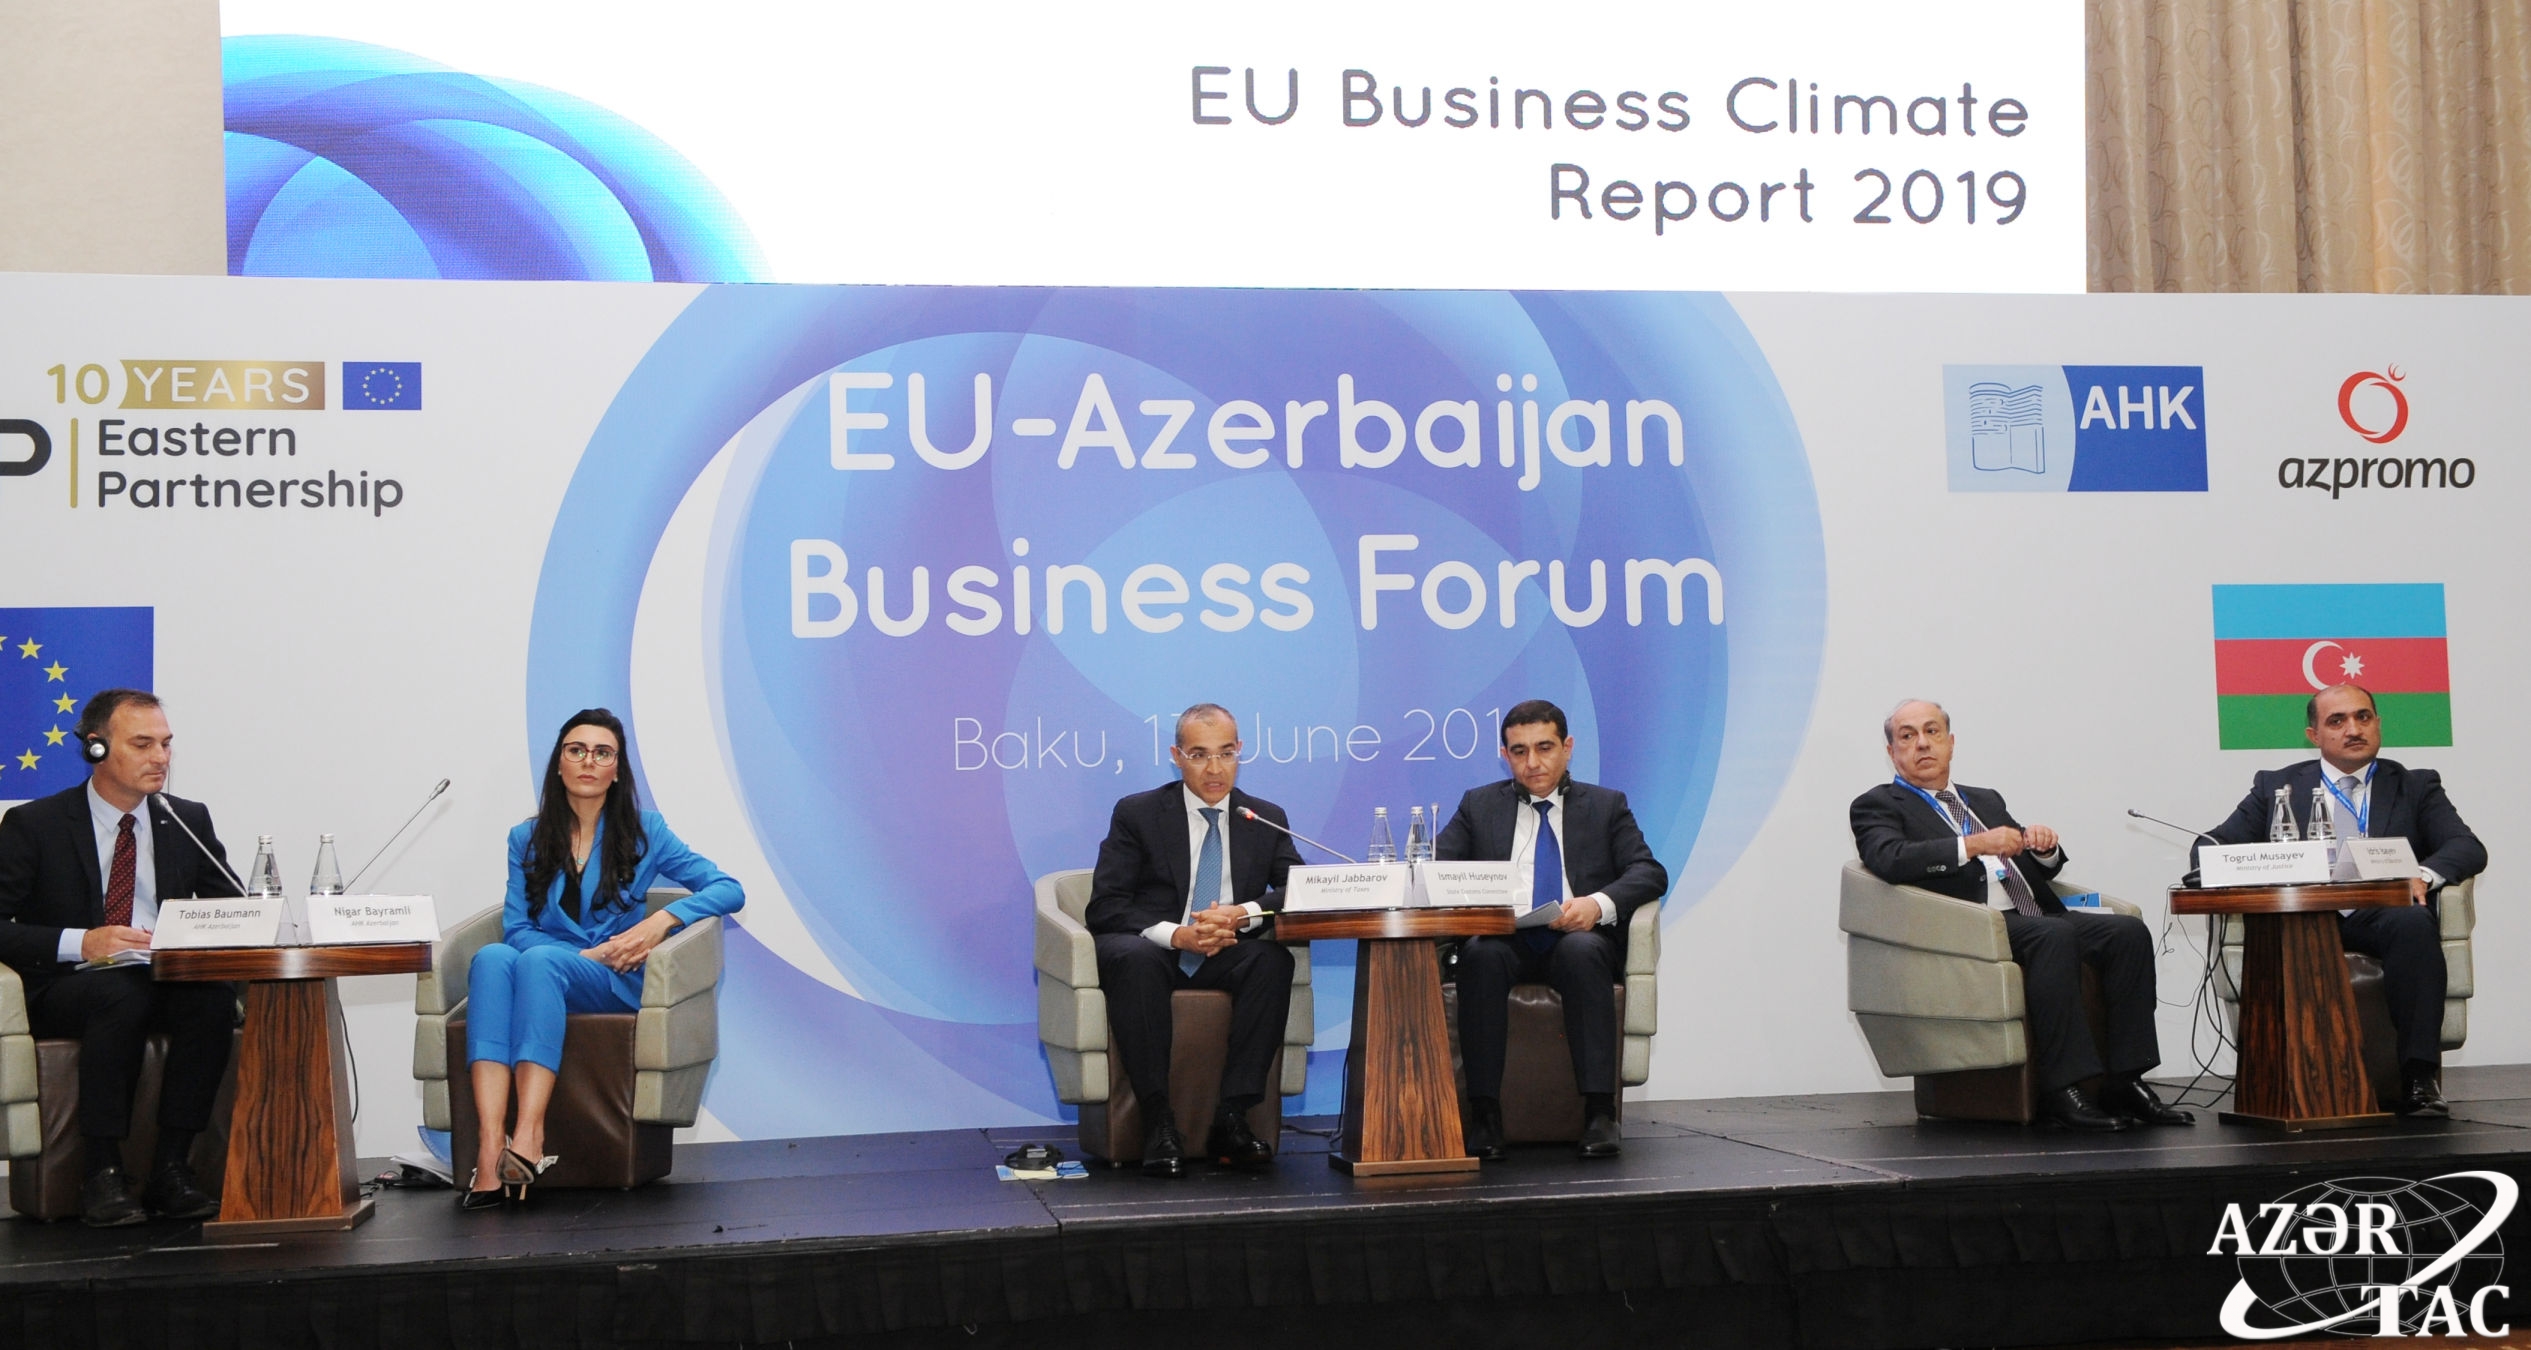 Az forum. Азербайджан европейс Союза. Представительство ЕС В Баку. Eastern partnership Azerbaijan. Eu-Azerbaijan Business forum logo.